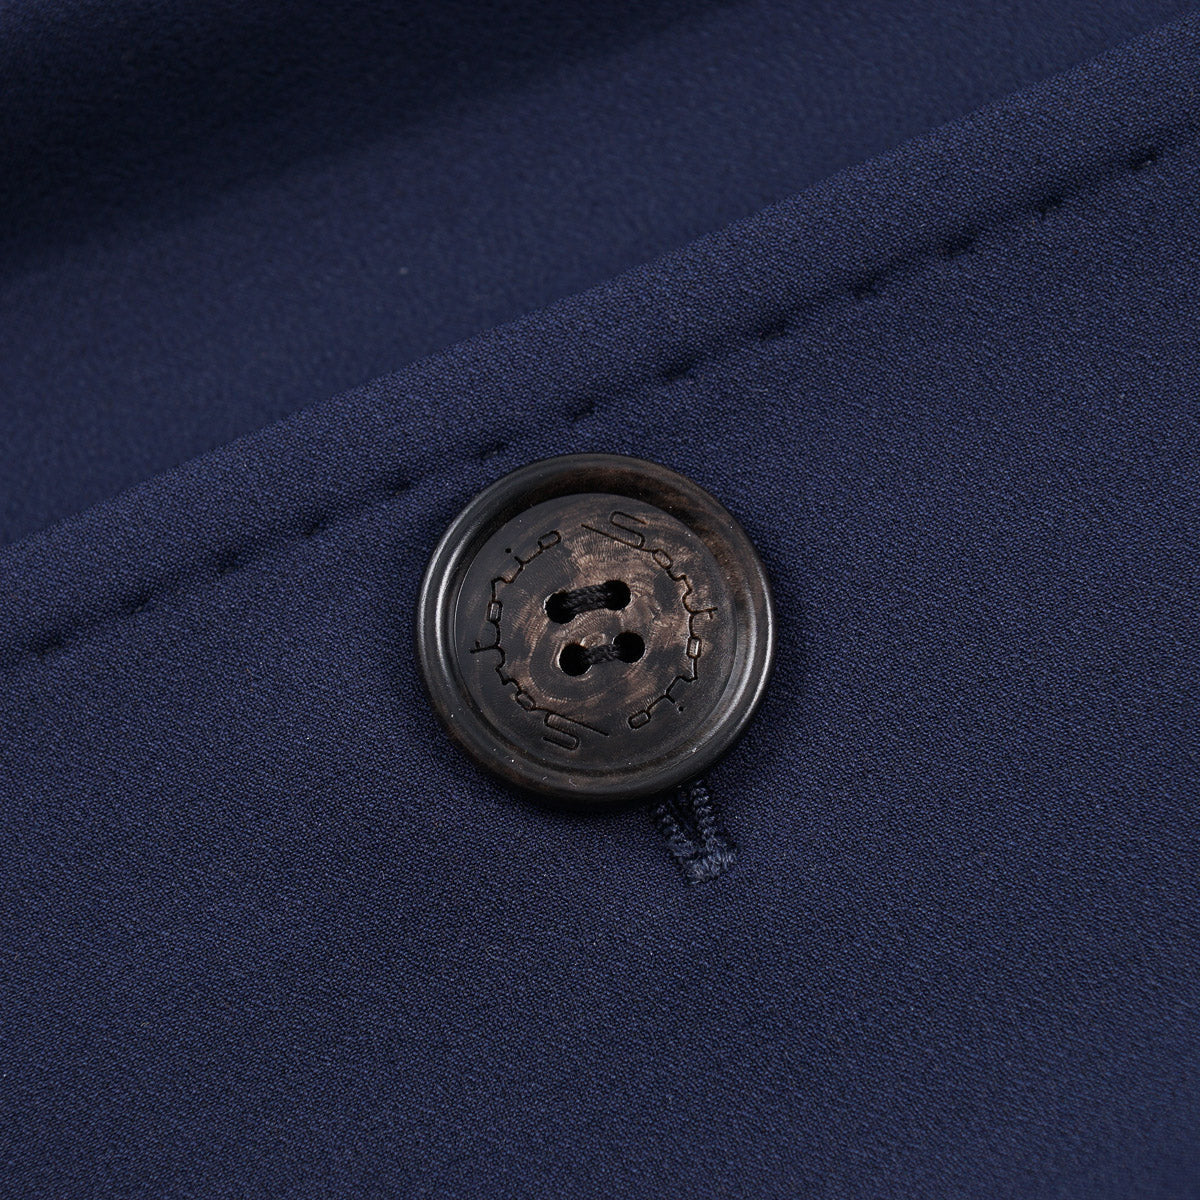 Sartorio Mid-Weight Wool-Blend Overcoat - Top Shelf Apparel